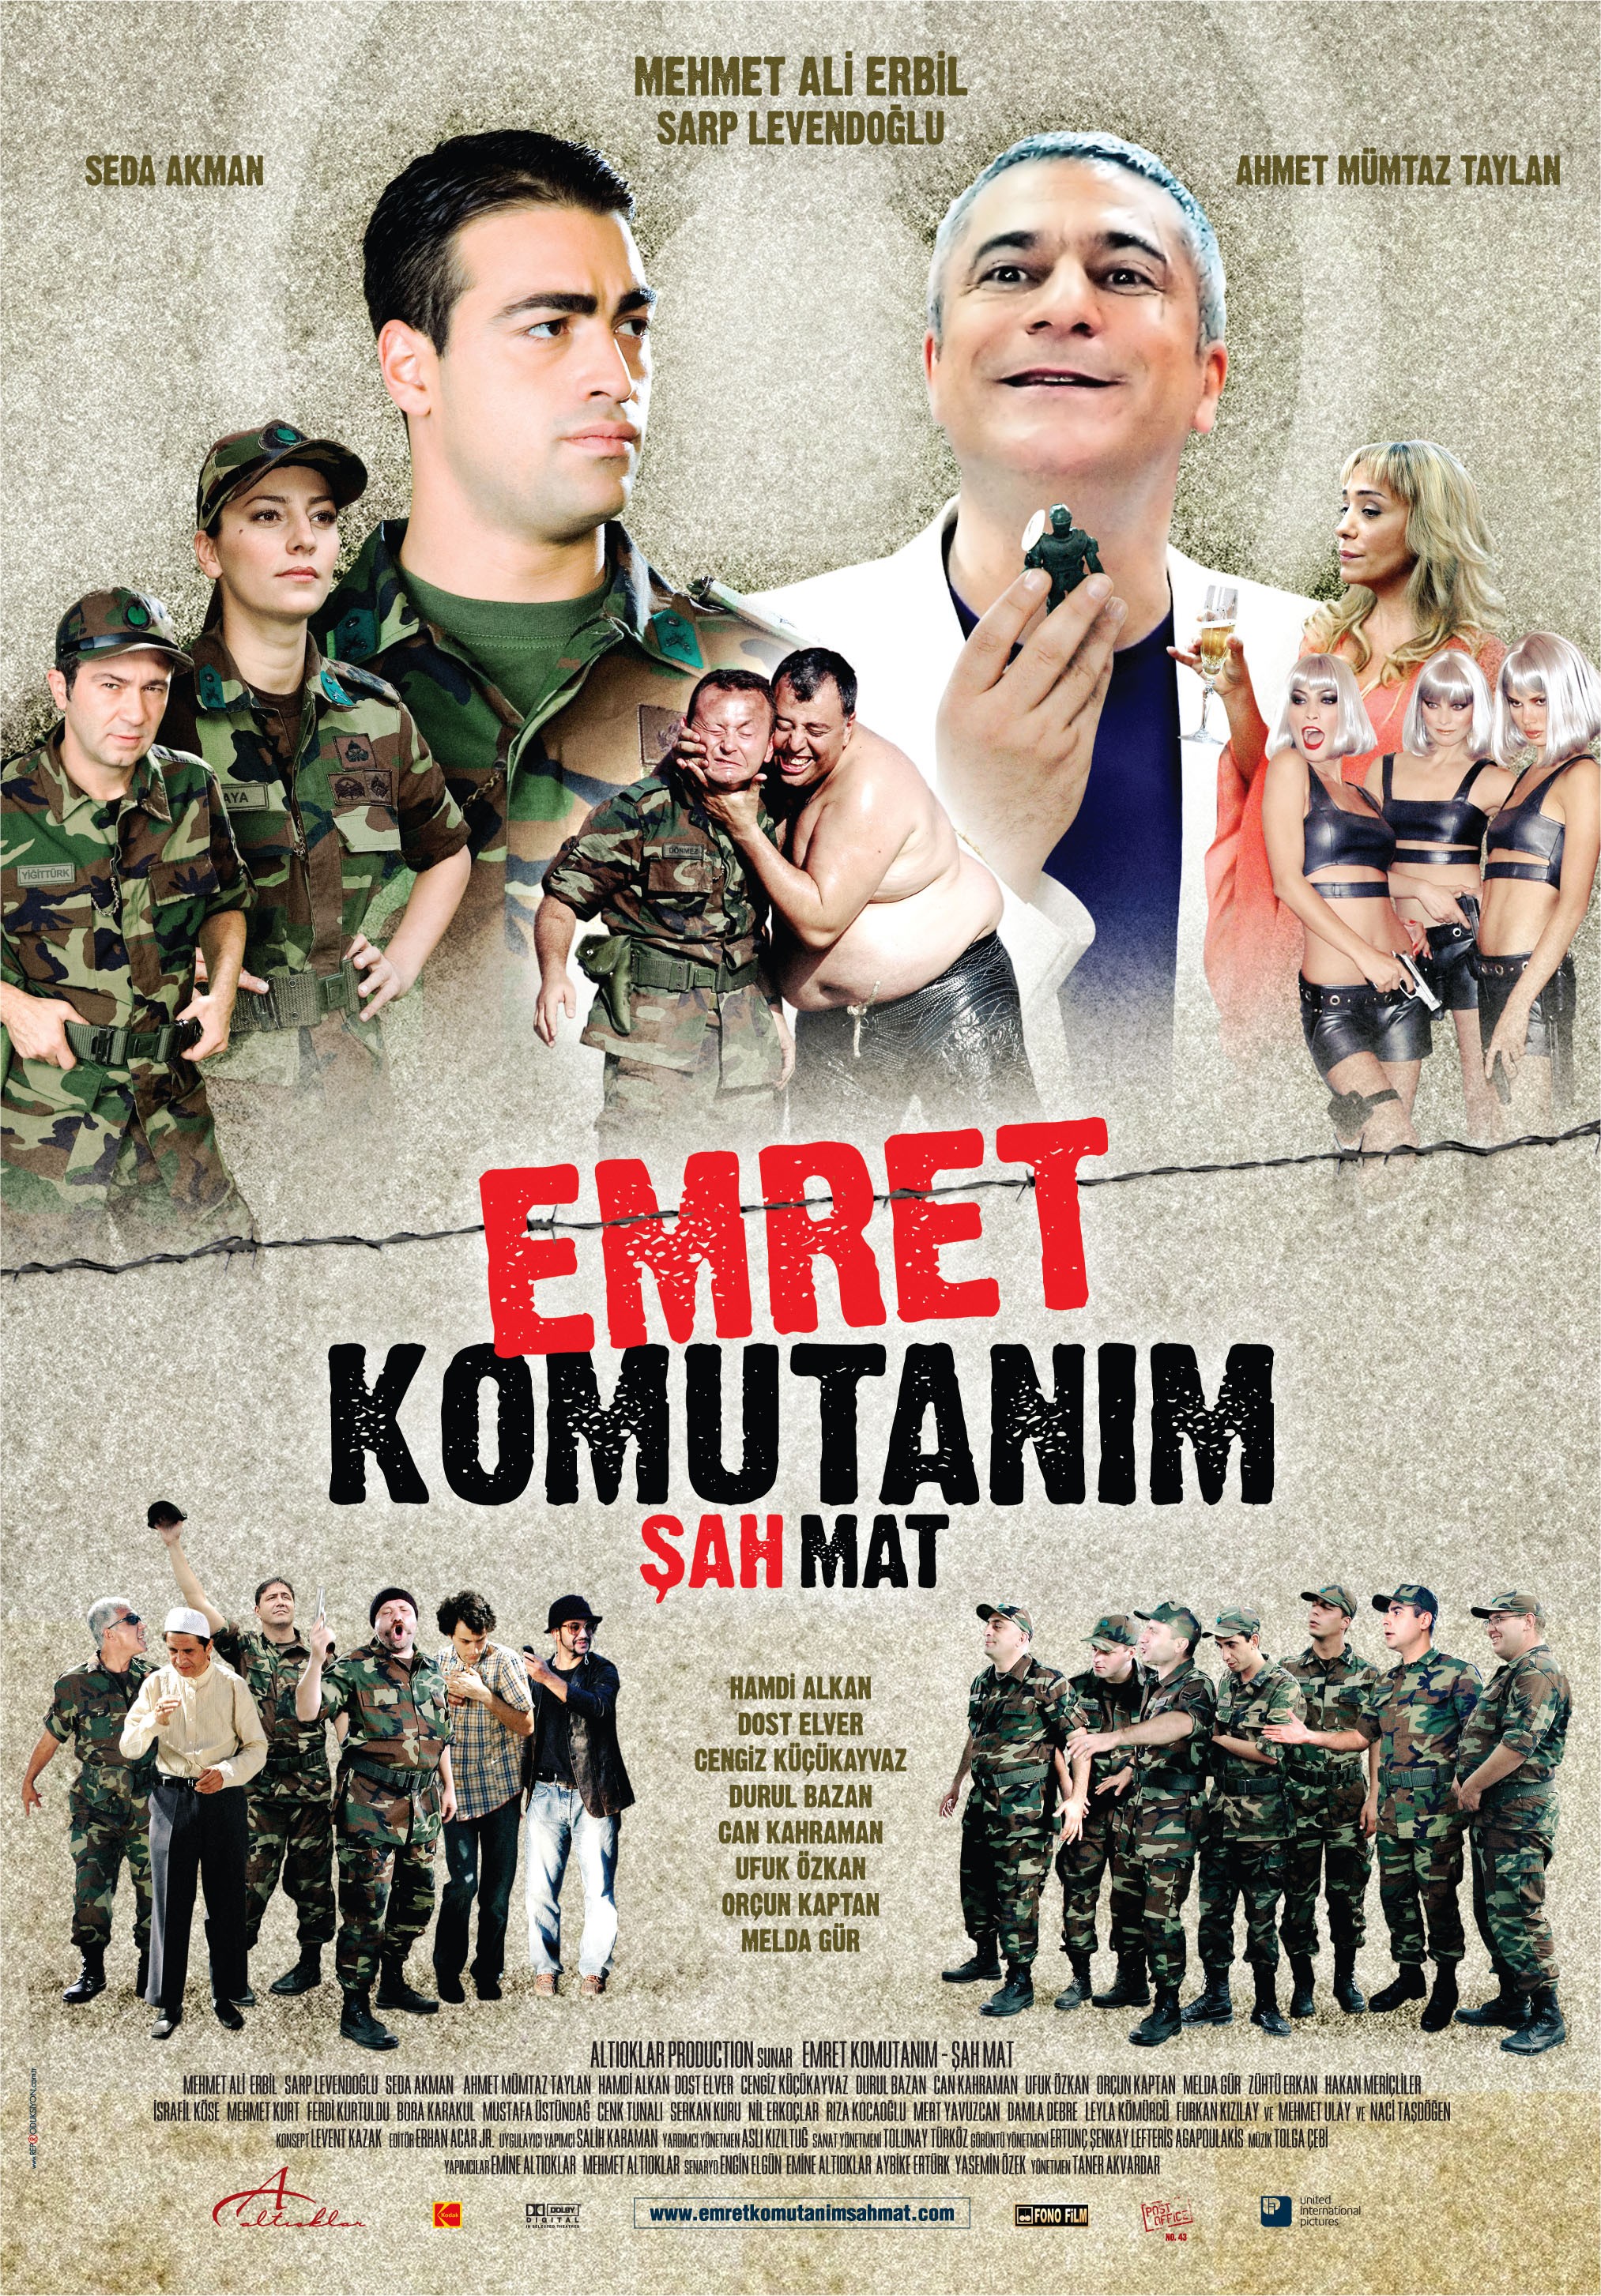 Mega Sized Movie Poster Image for Emret komutanim: Sah mat 